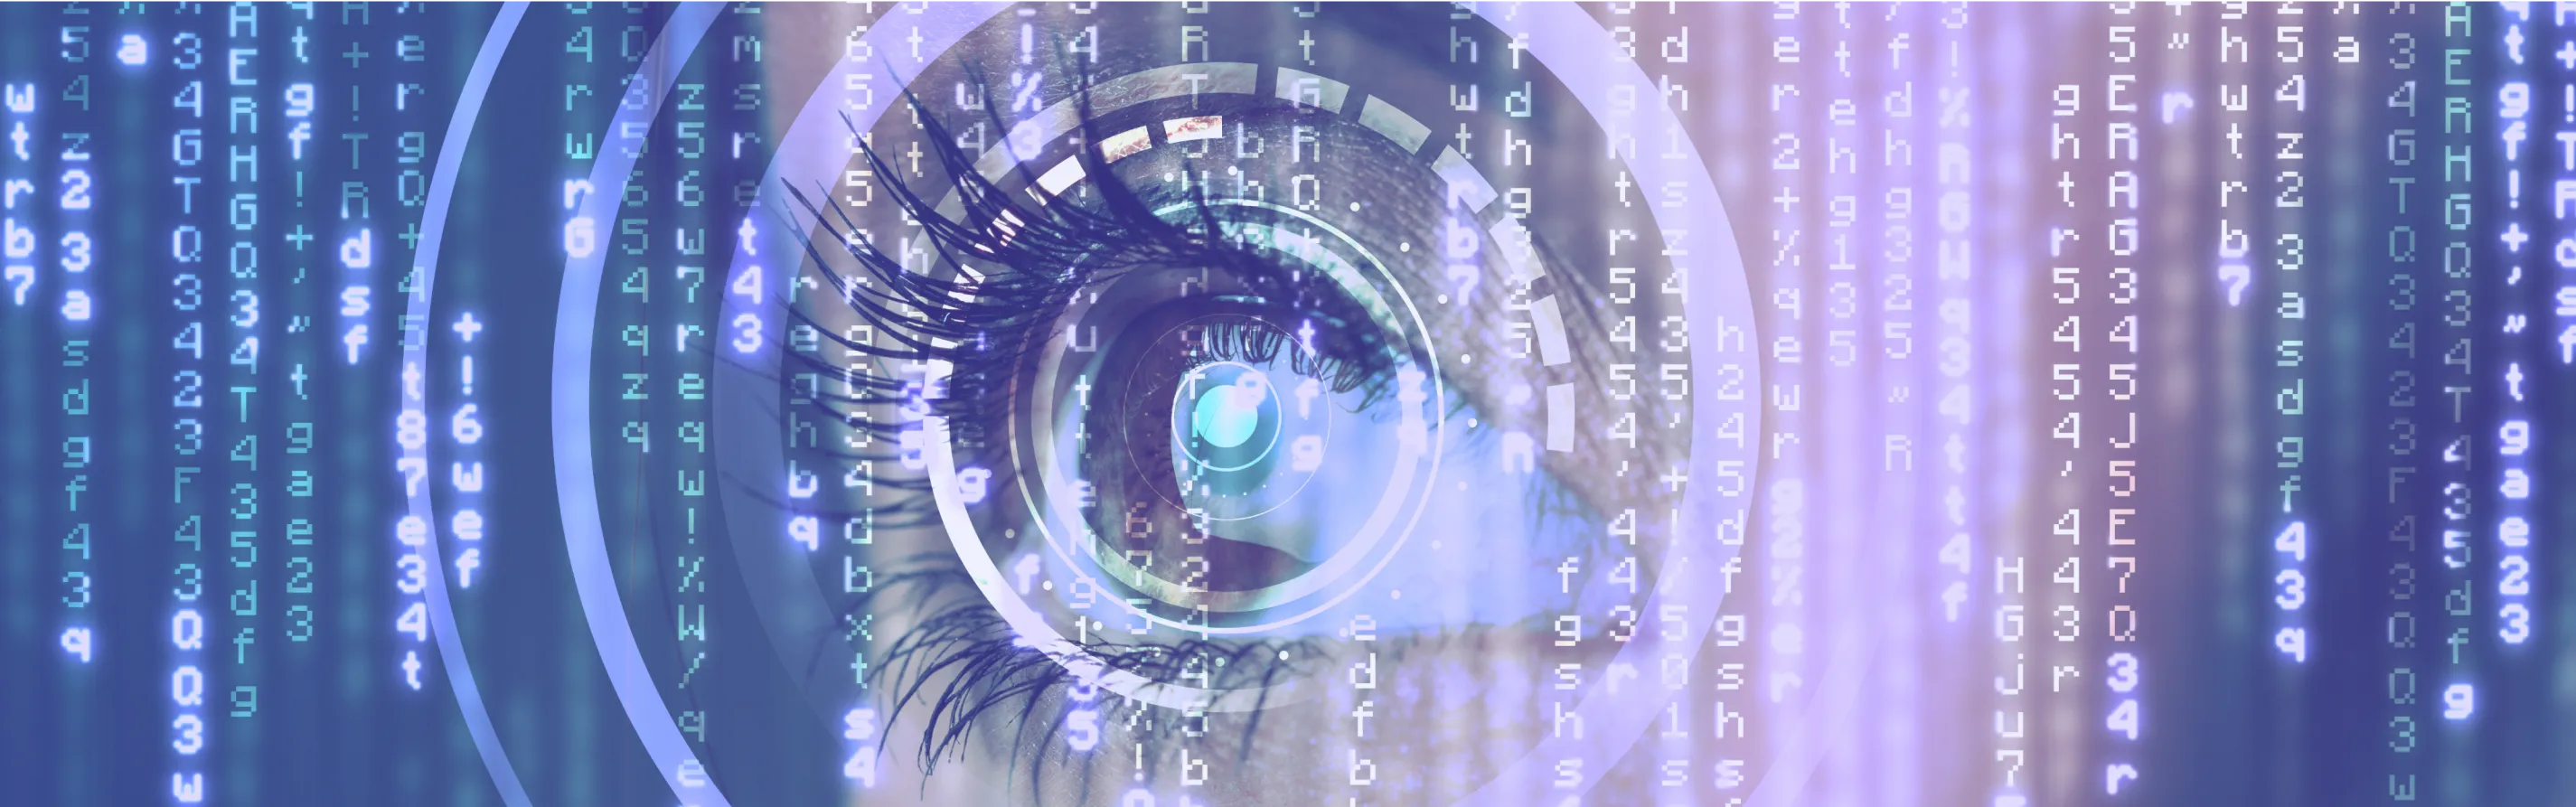 Computer Vision / AI 開発